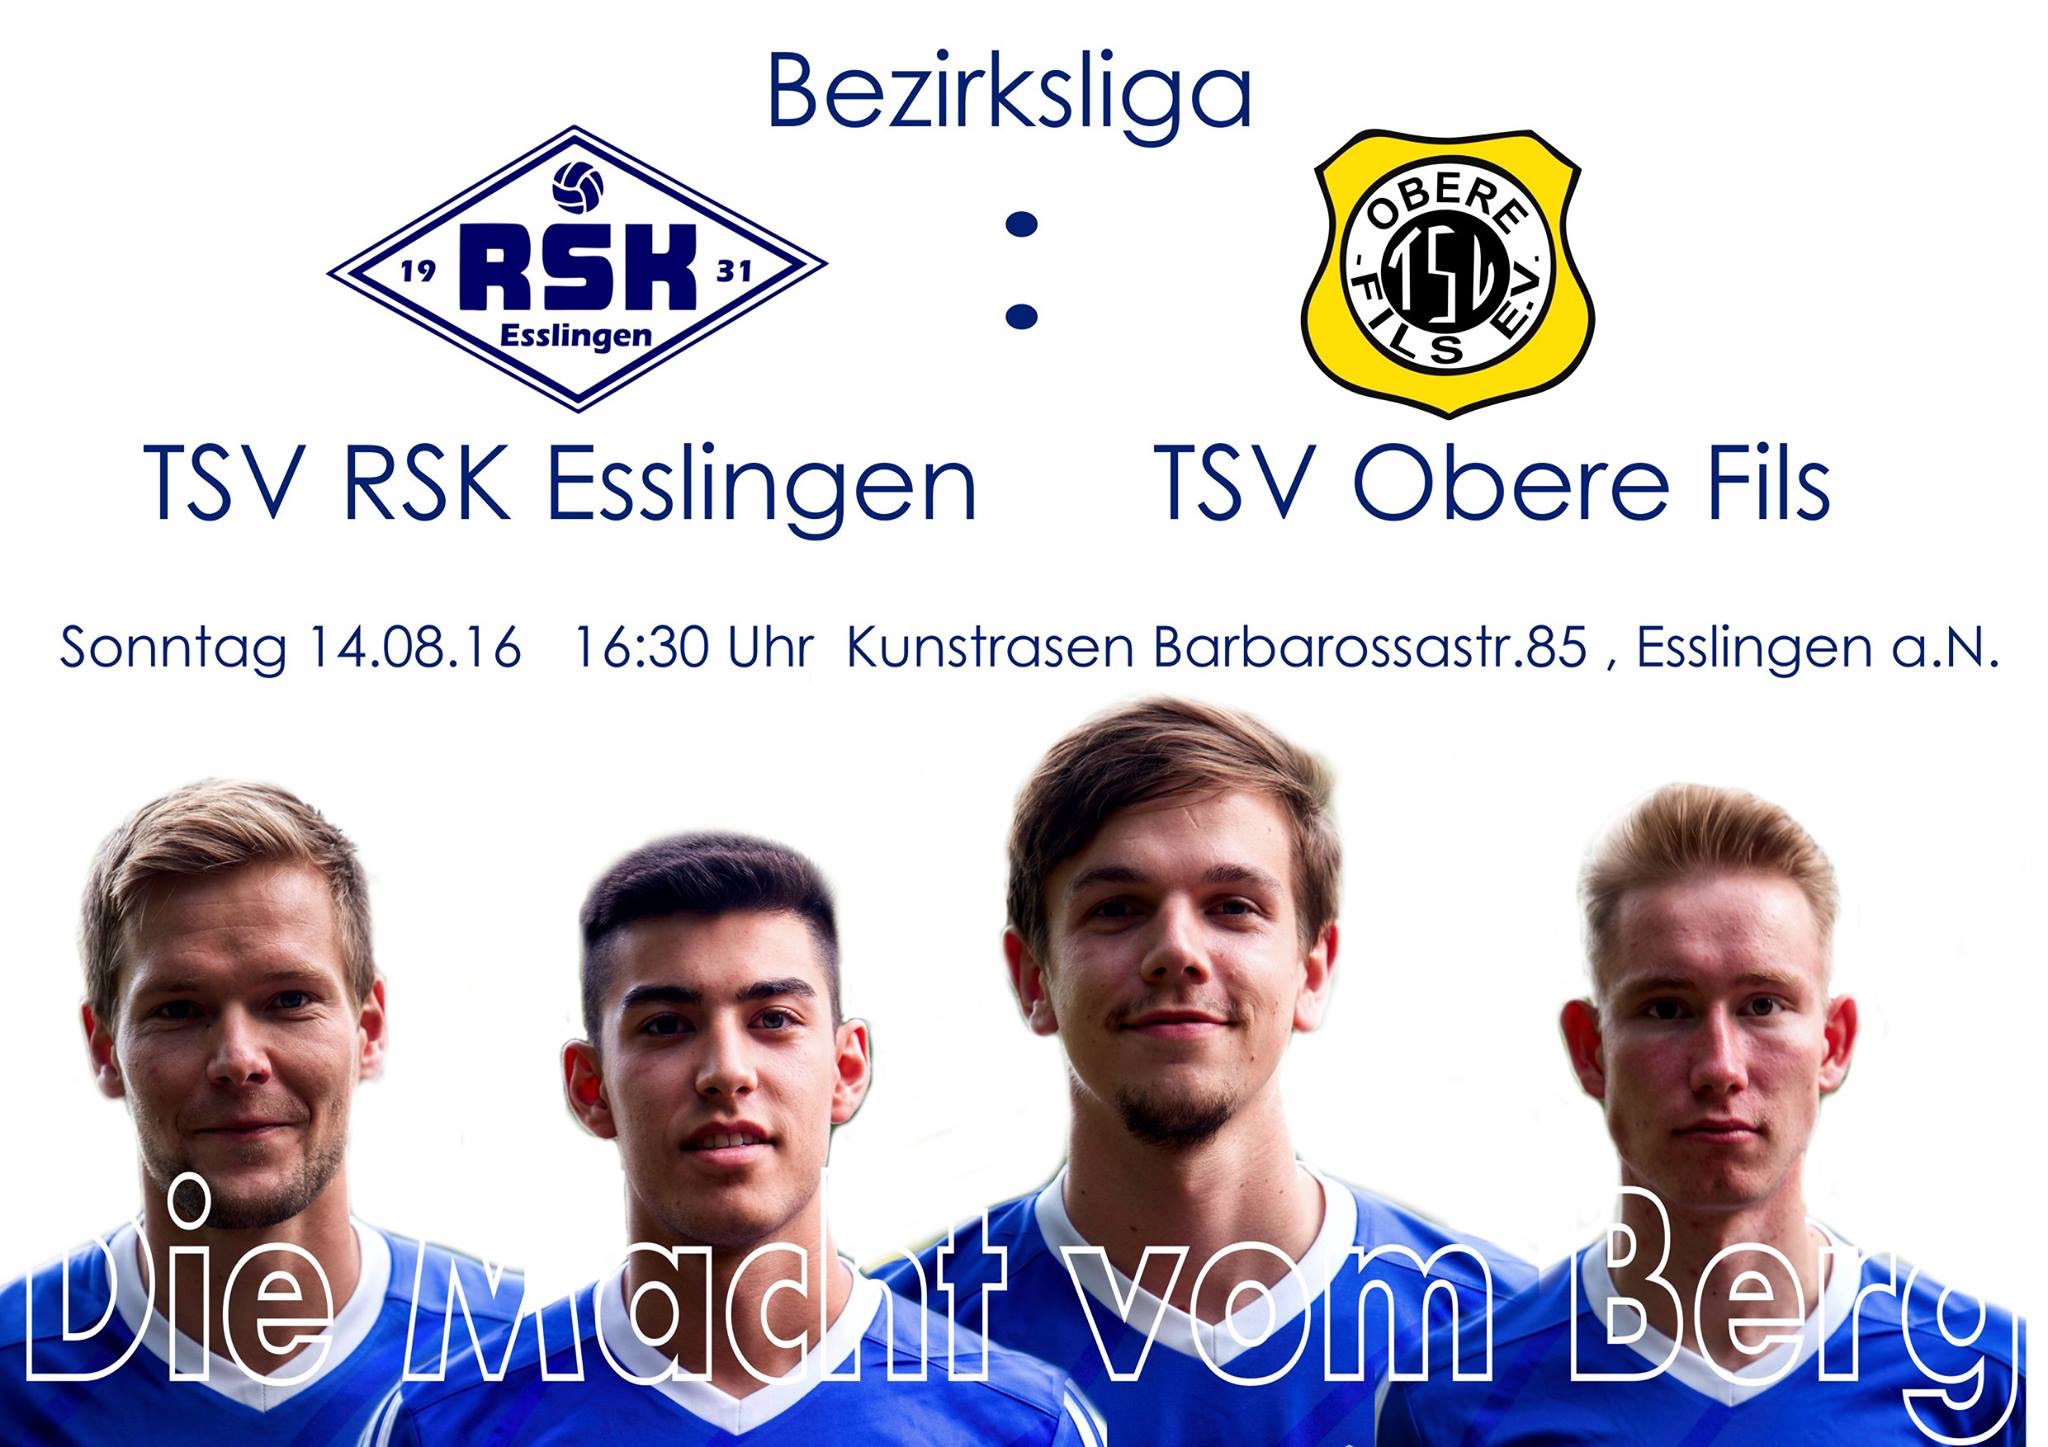 Voschau Bezirksliga 1.Spieltag TSV Obere Fils